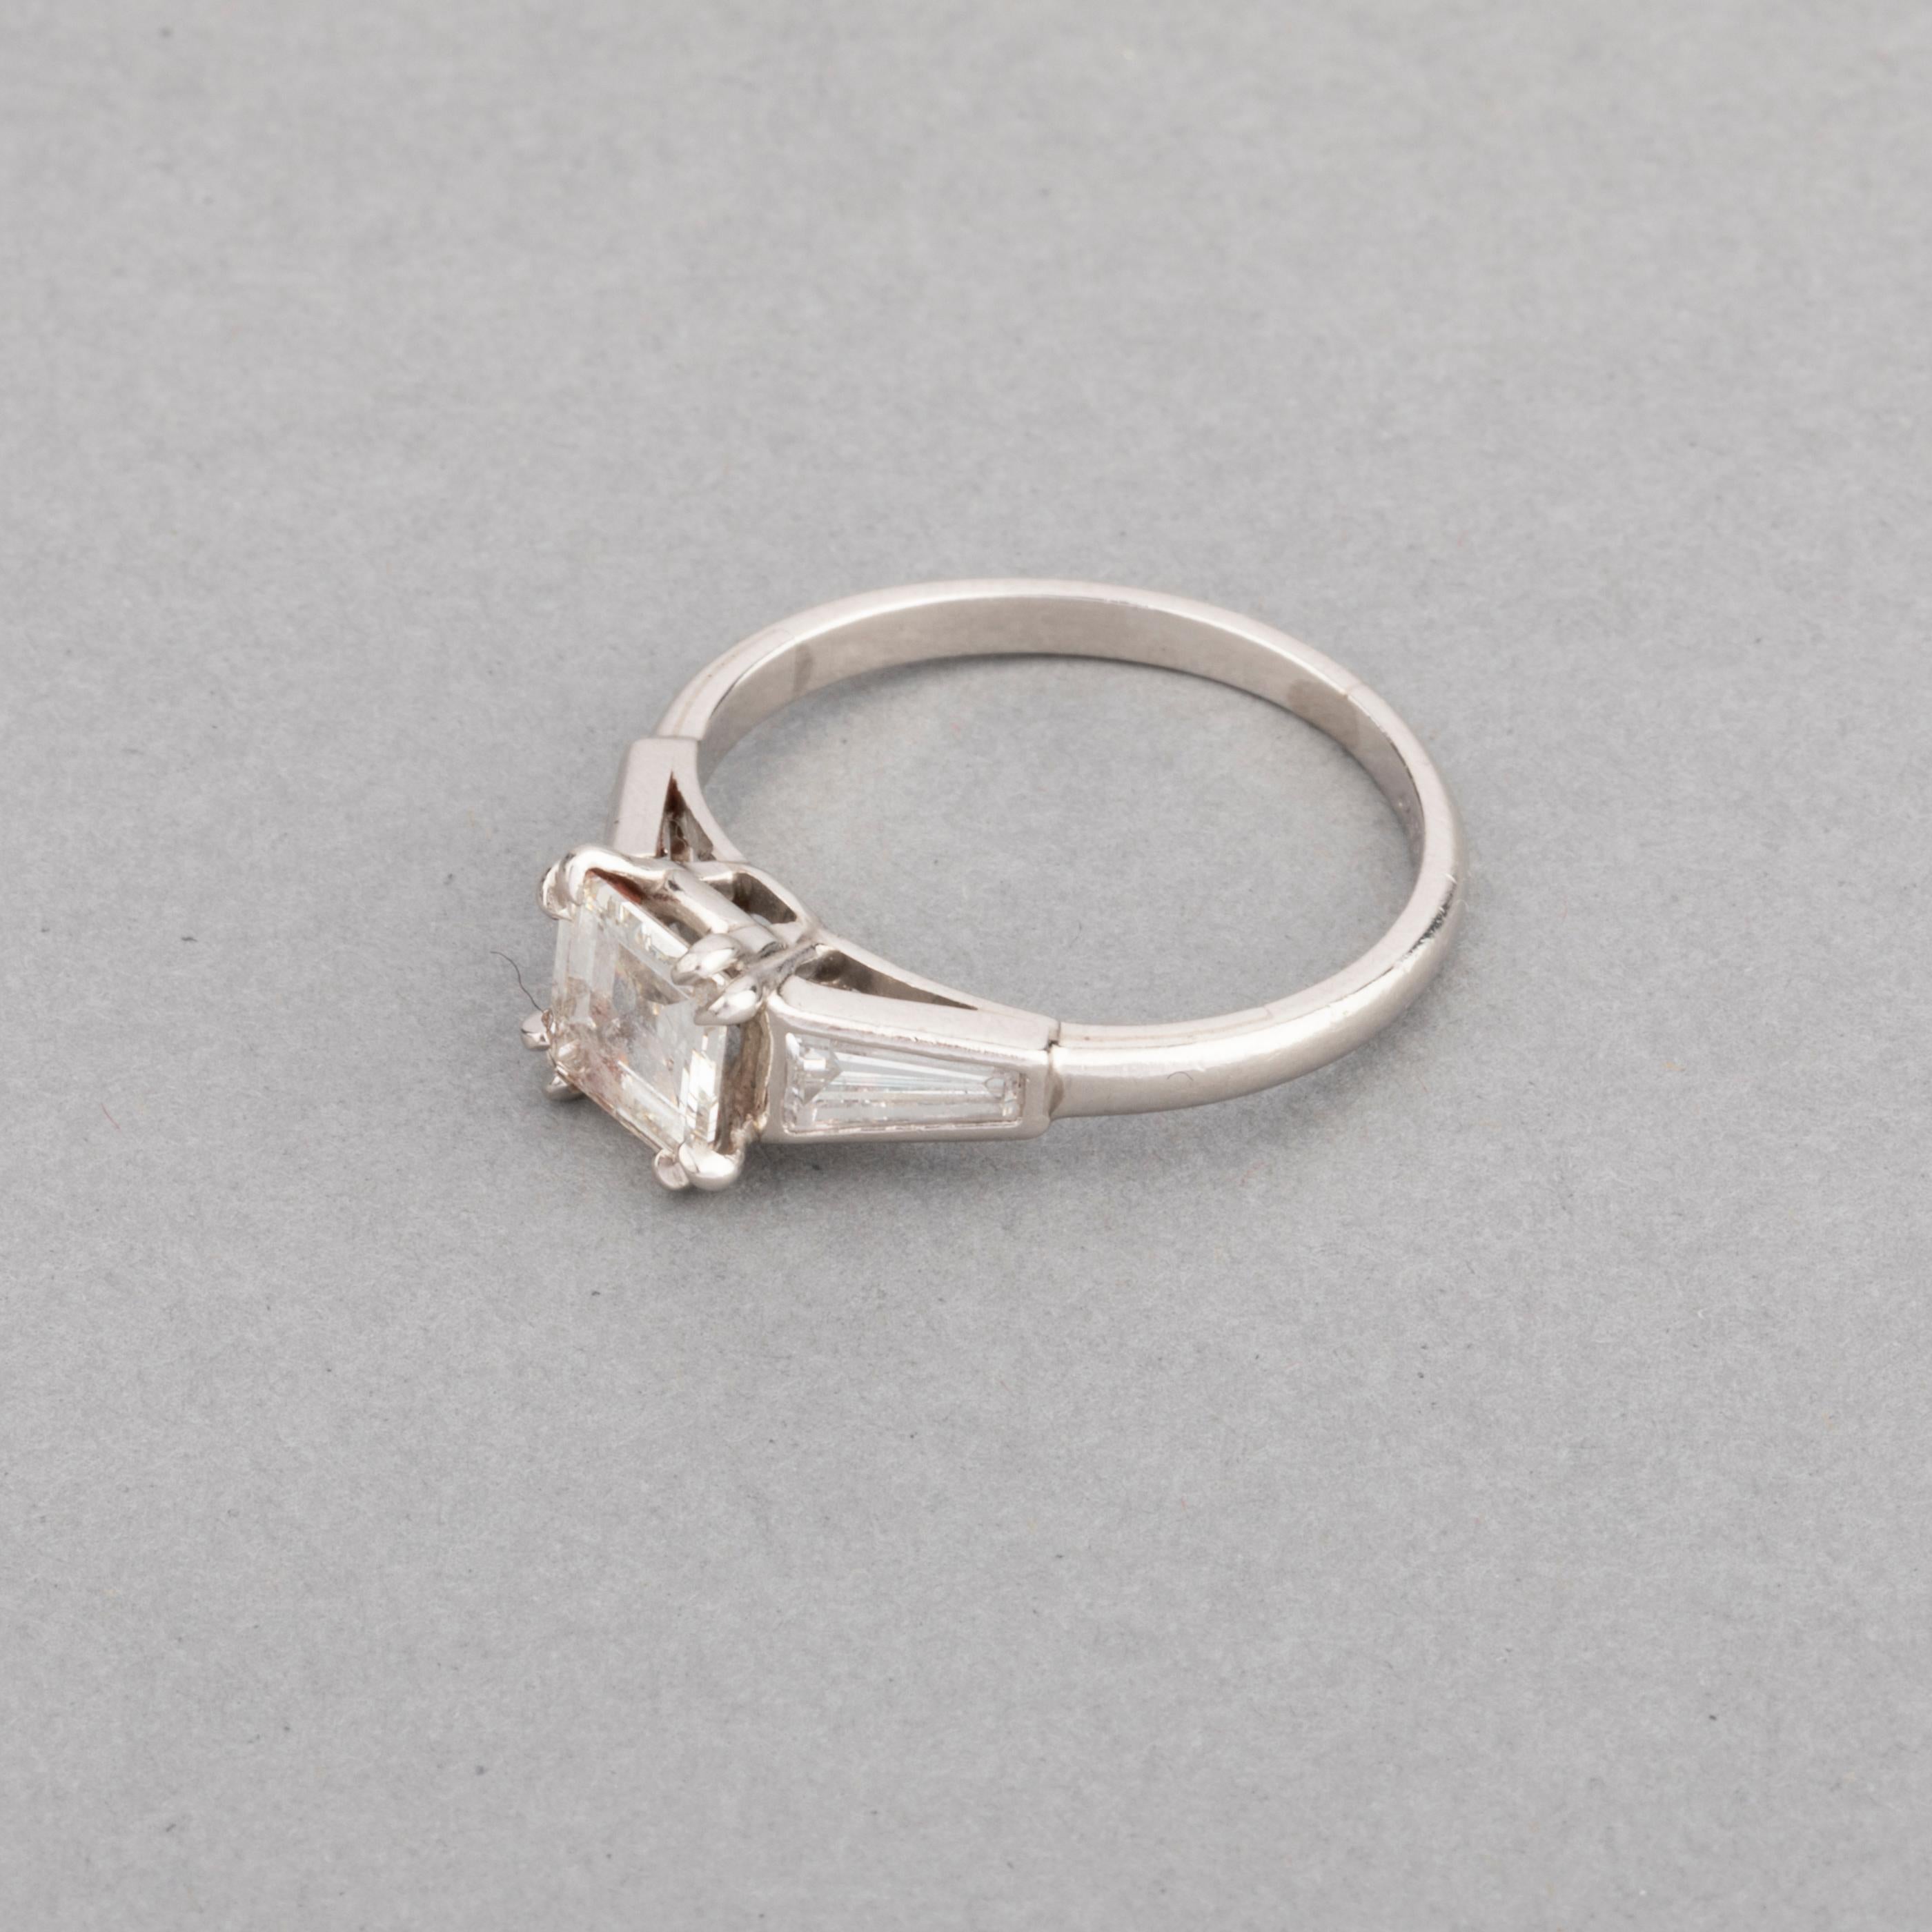 Square Cut 1 Carat Diamond Chaumet Paris Engagement Ring